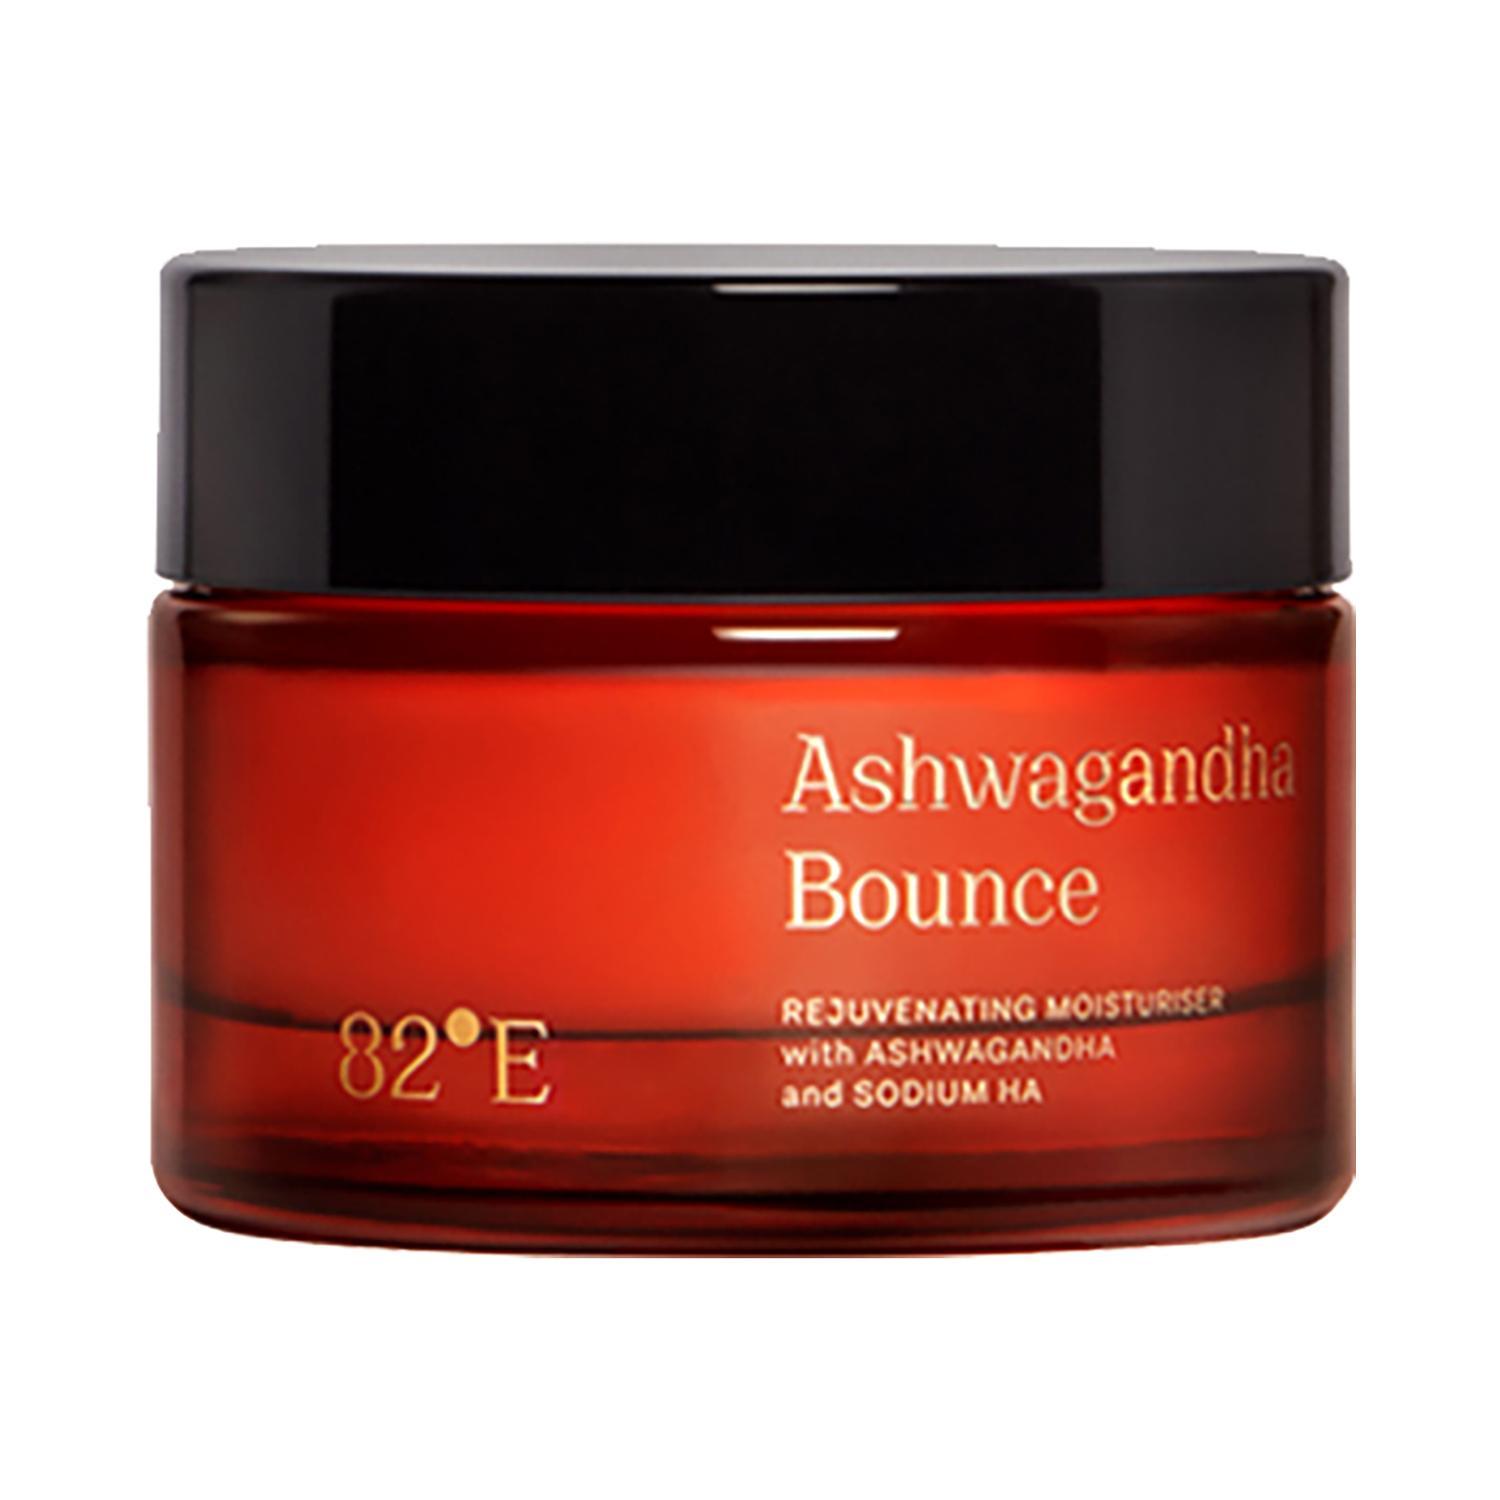 82°e ashwagandha bounce face moisturizer (50 ml)